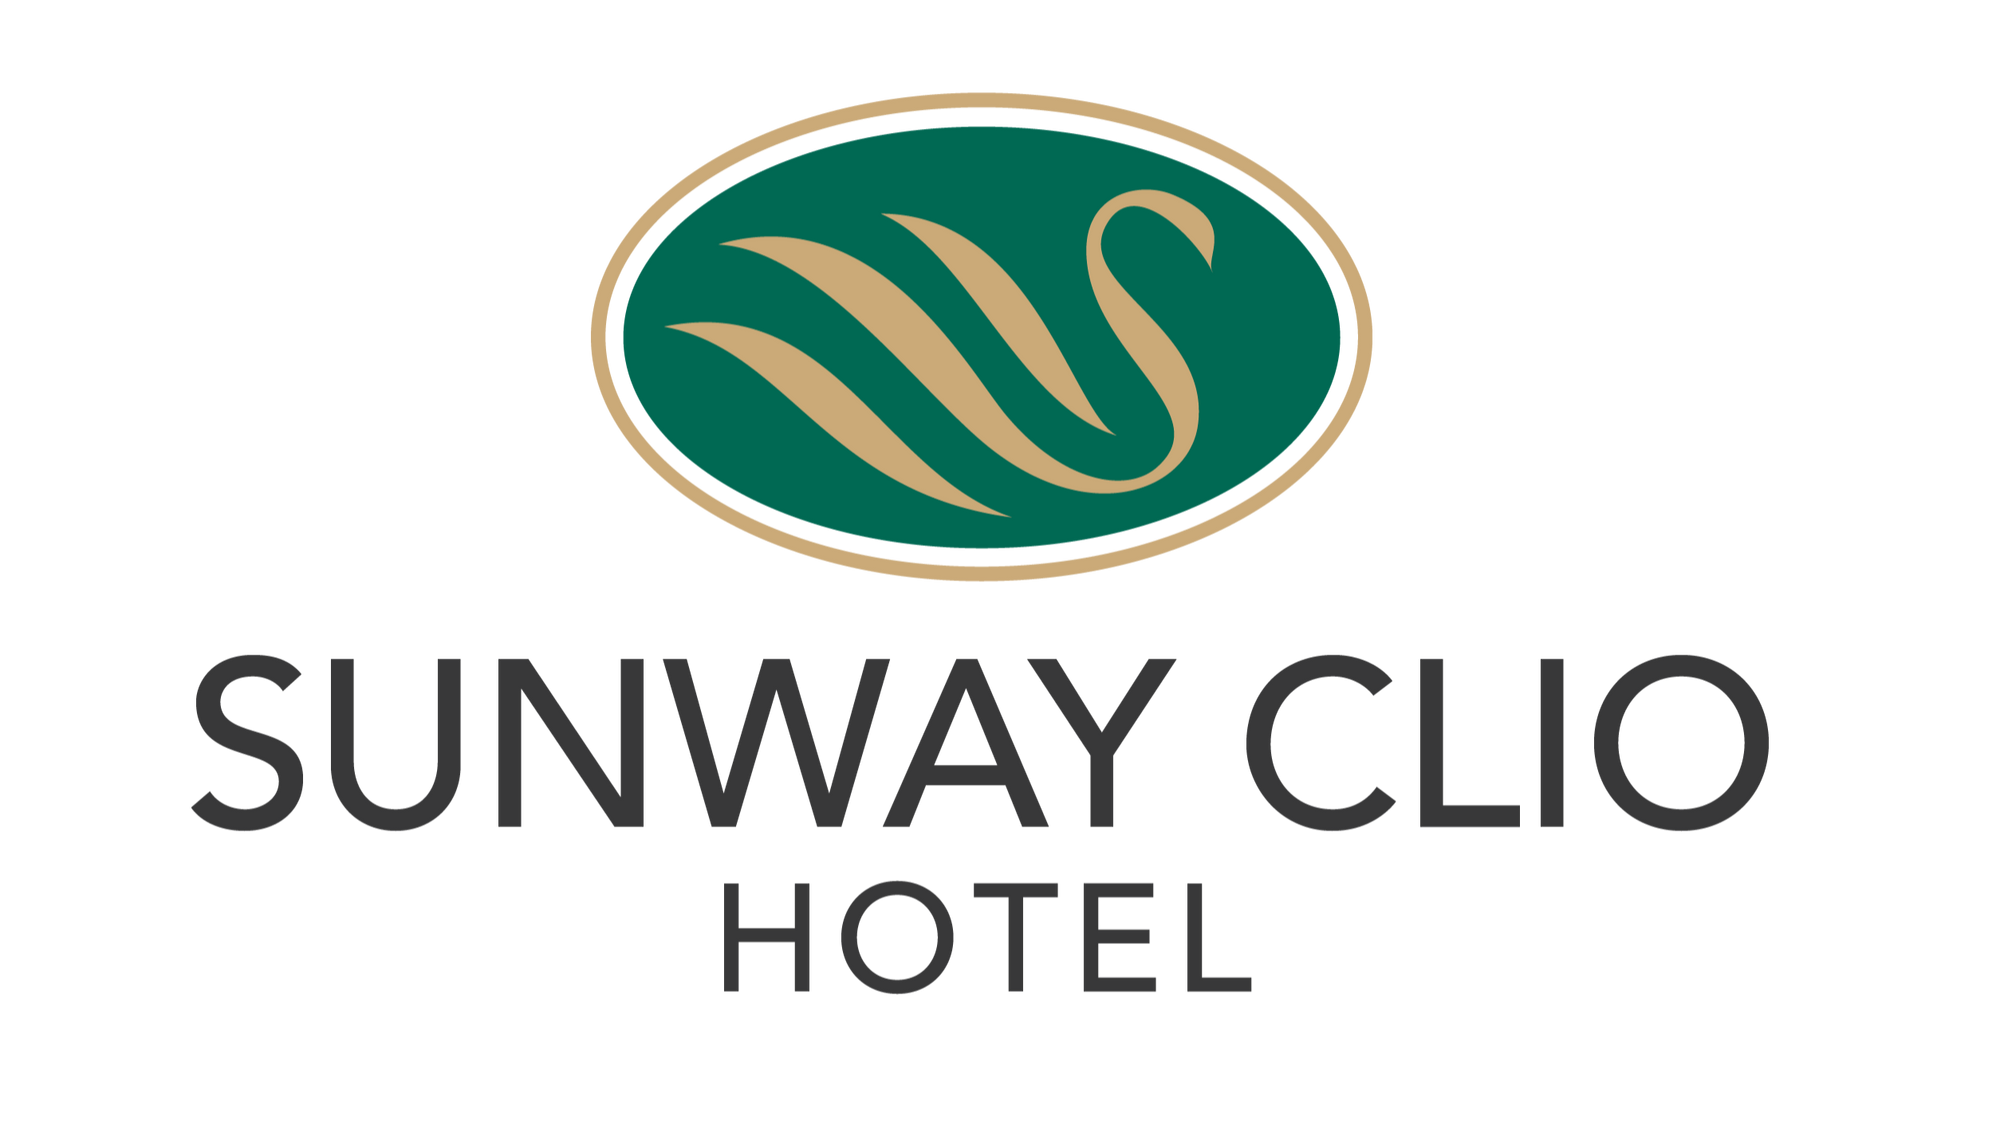 Sunway clio hotel